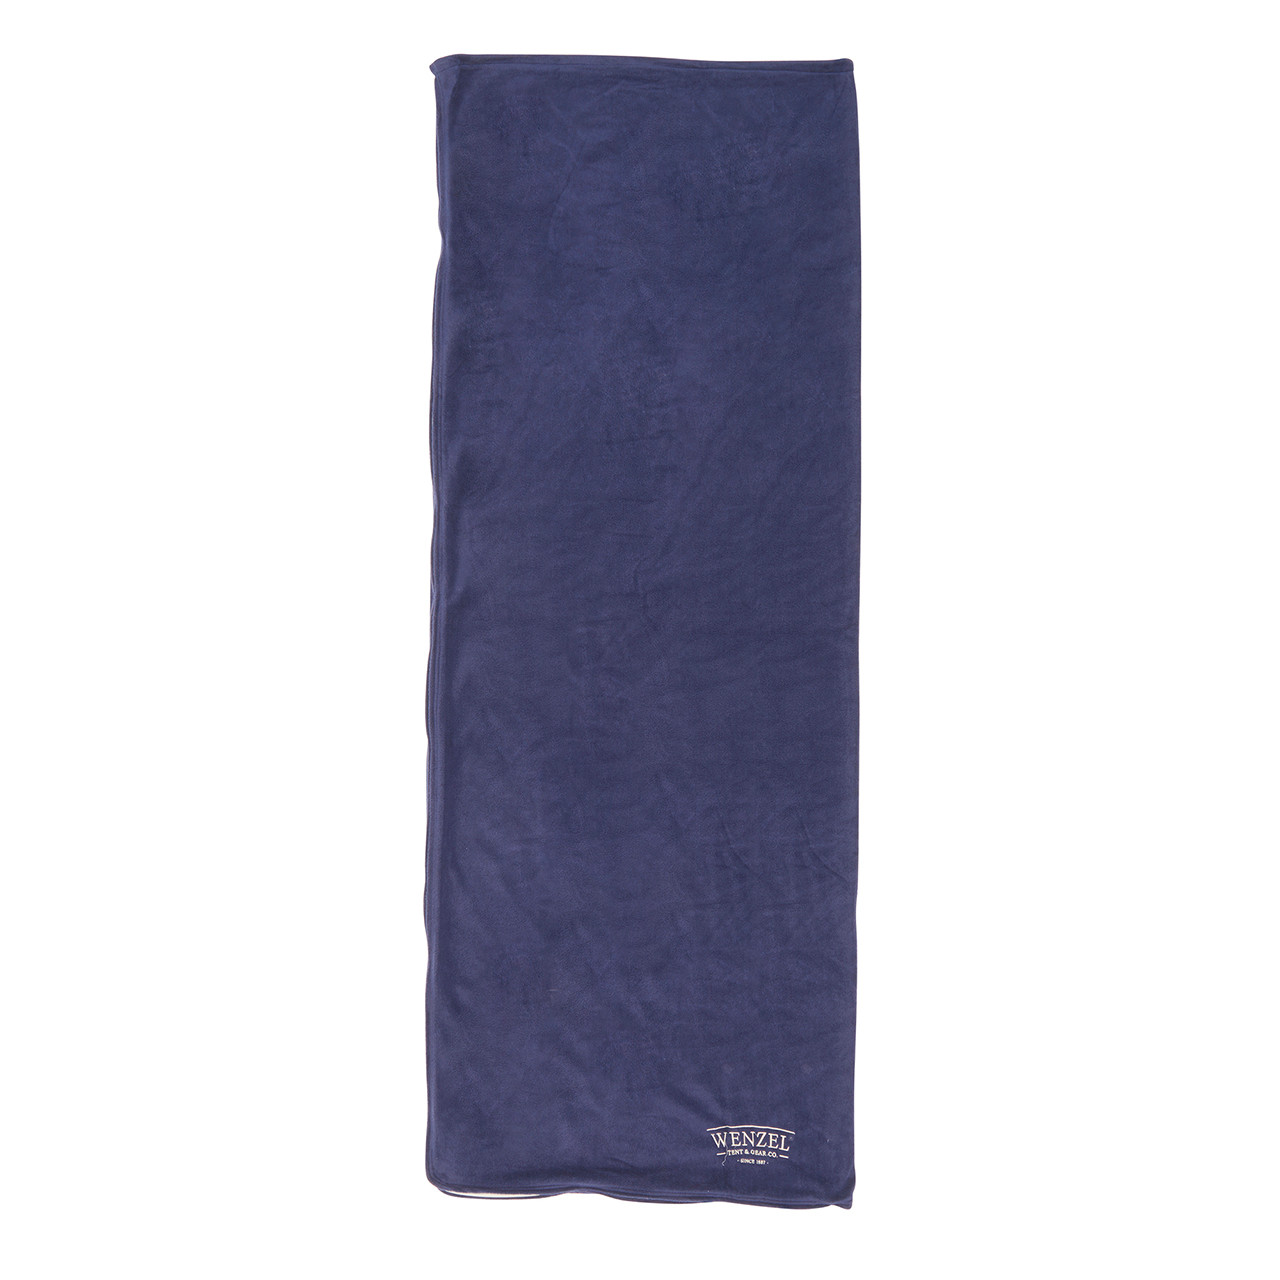 Wenzel Flannery Fleece sleeping bag, purple, laying flat fully zipped shut